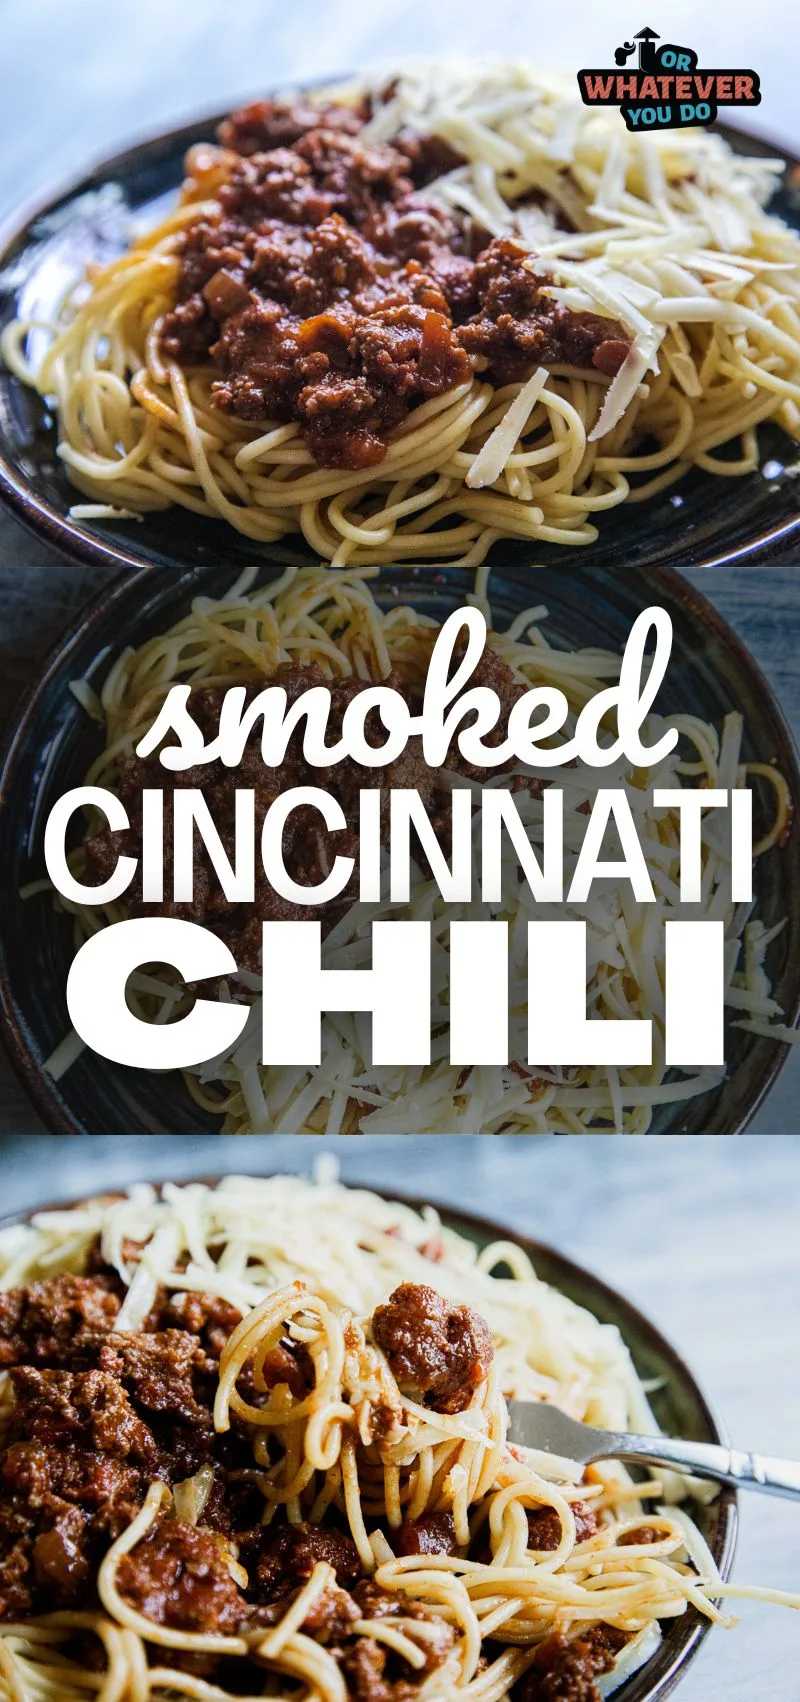 Smoked Cincinnati Chili Recipe